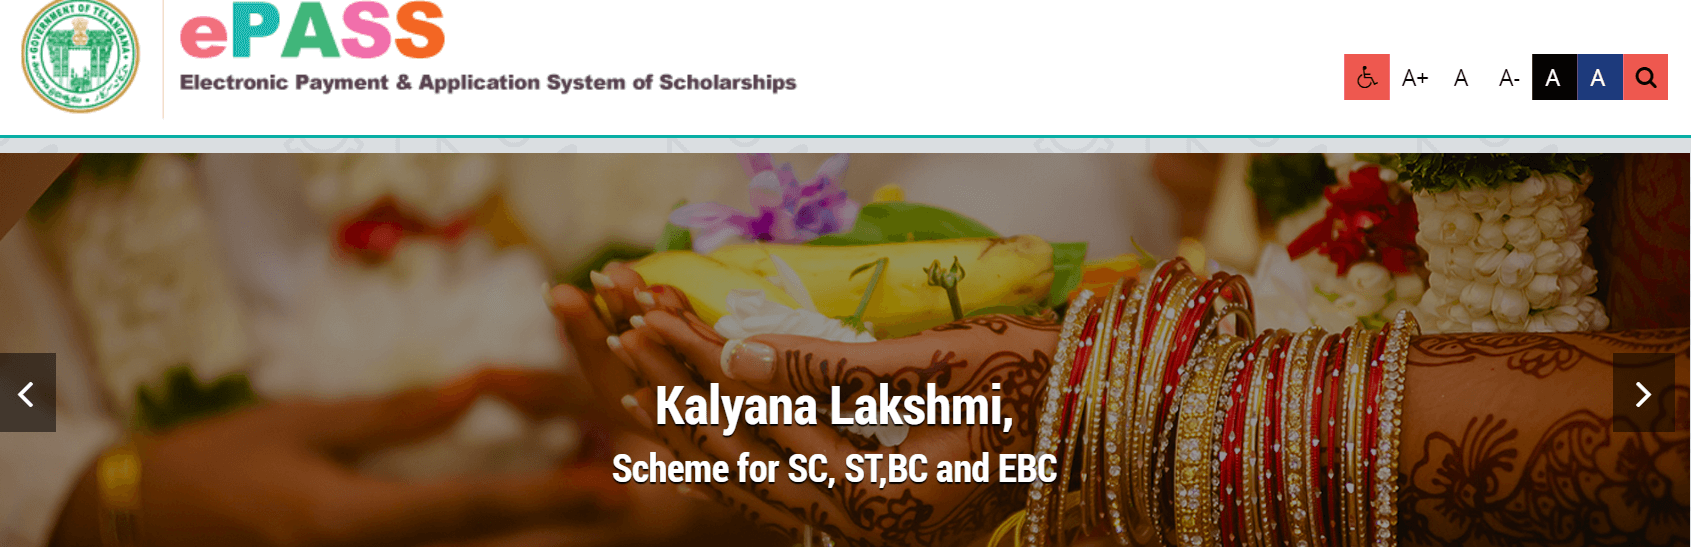 Kalyana Lakshmi Website homepage